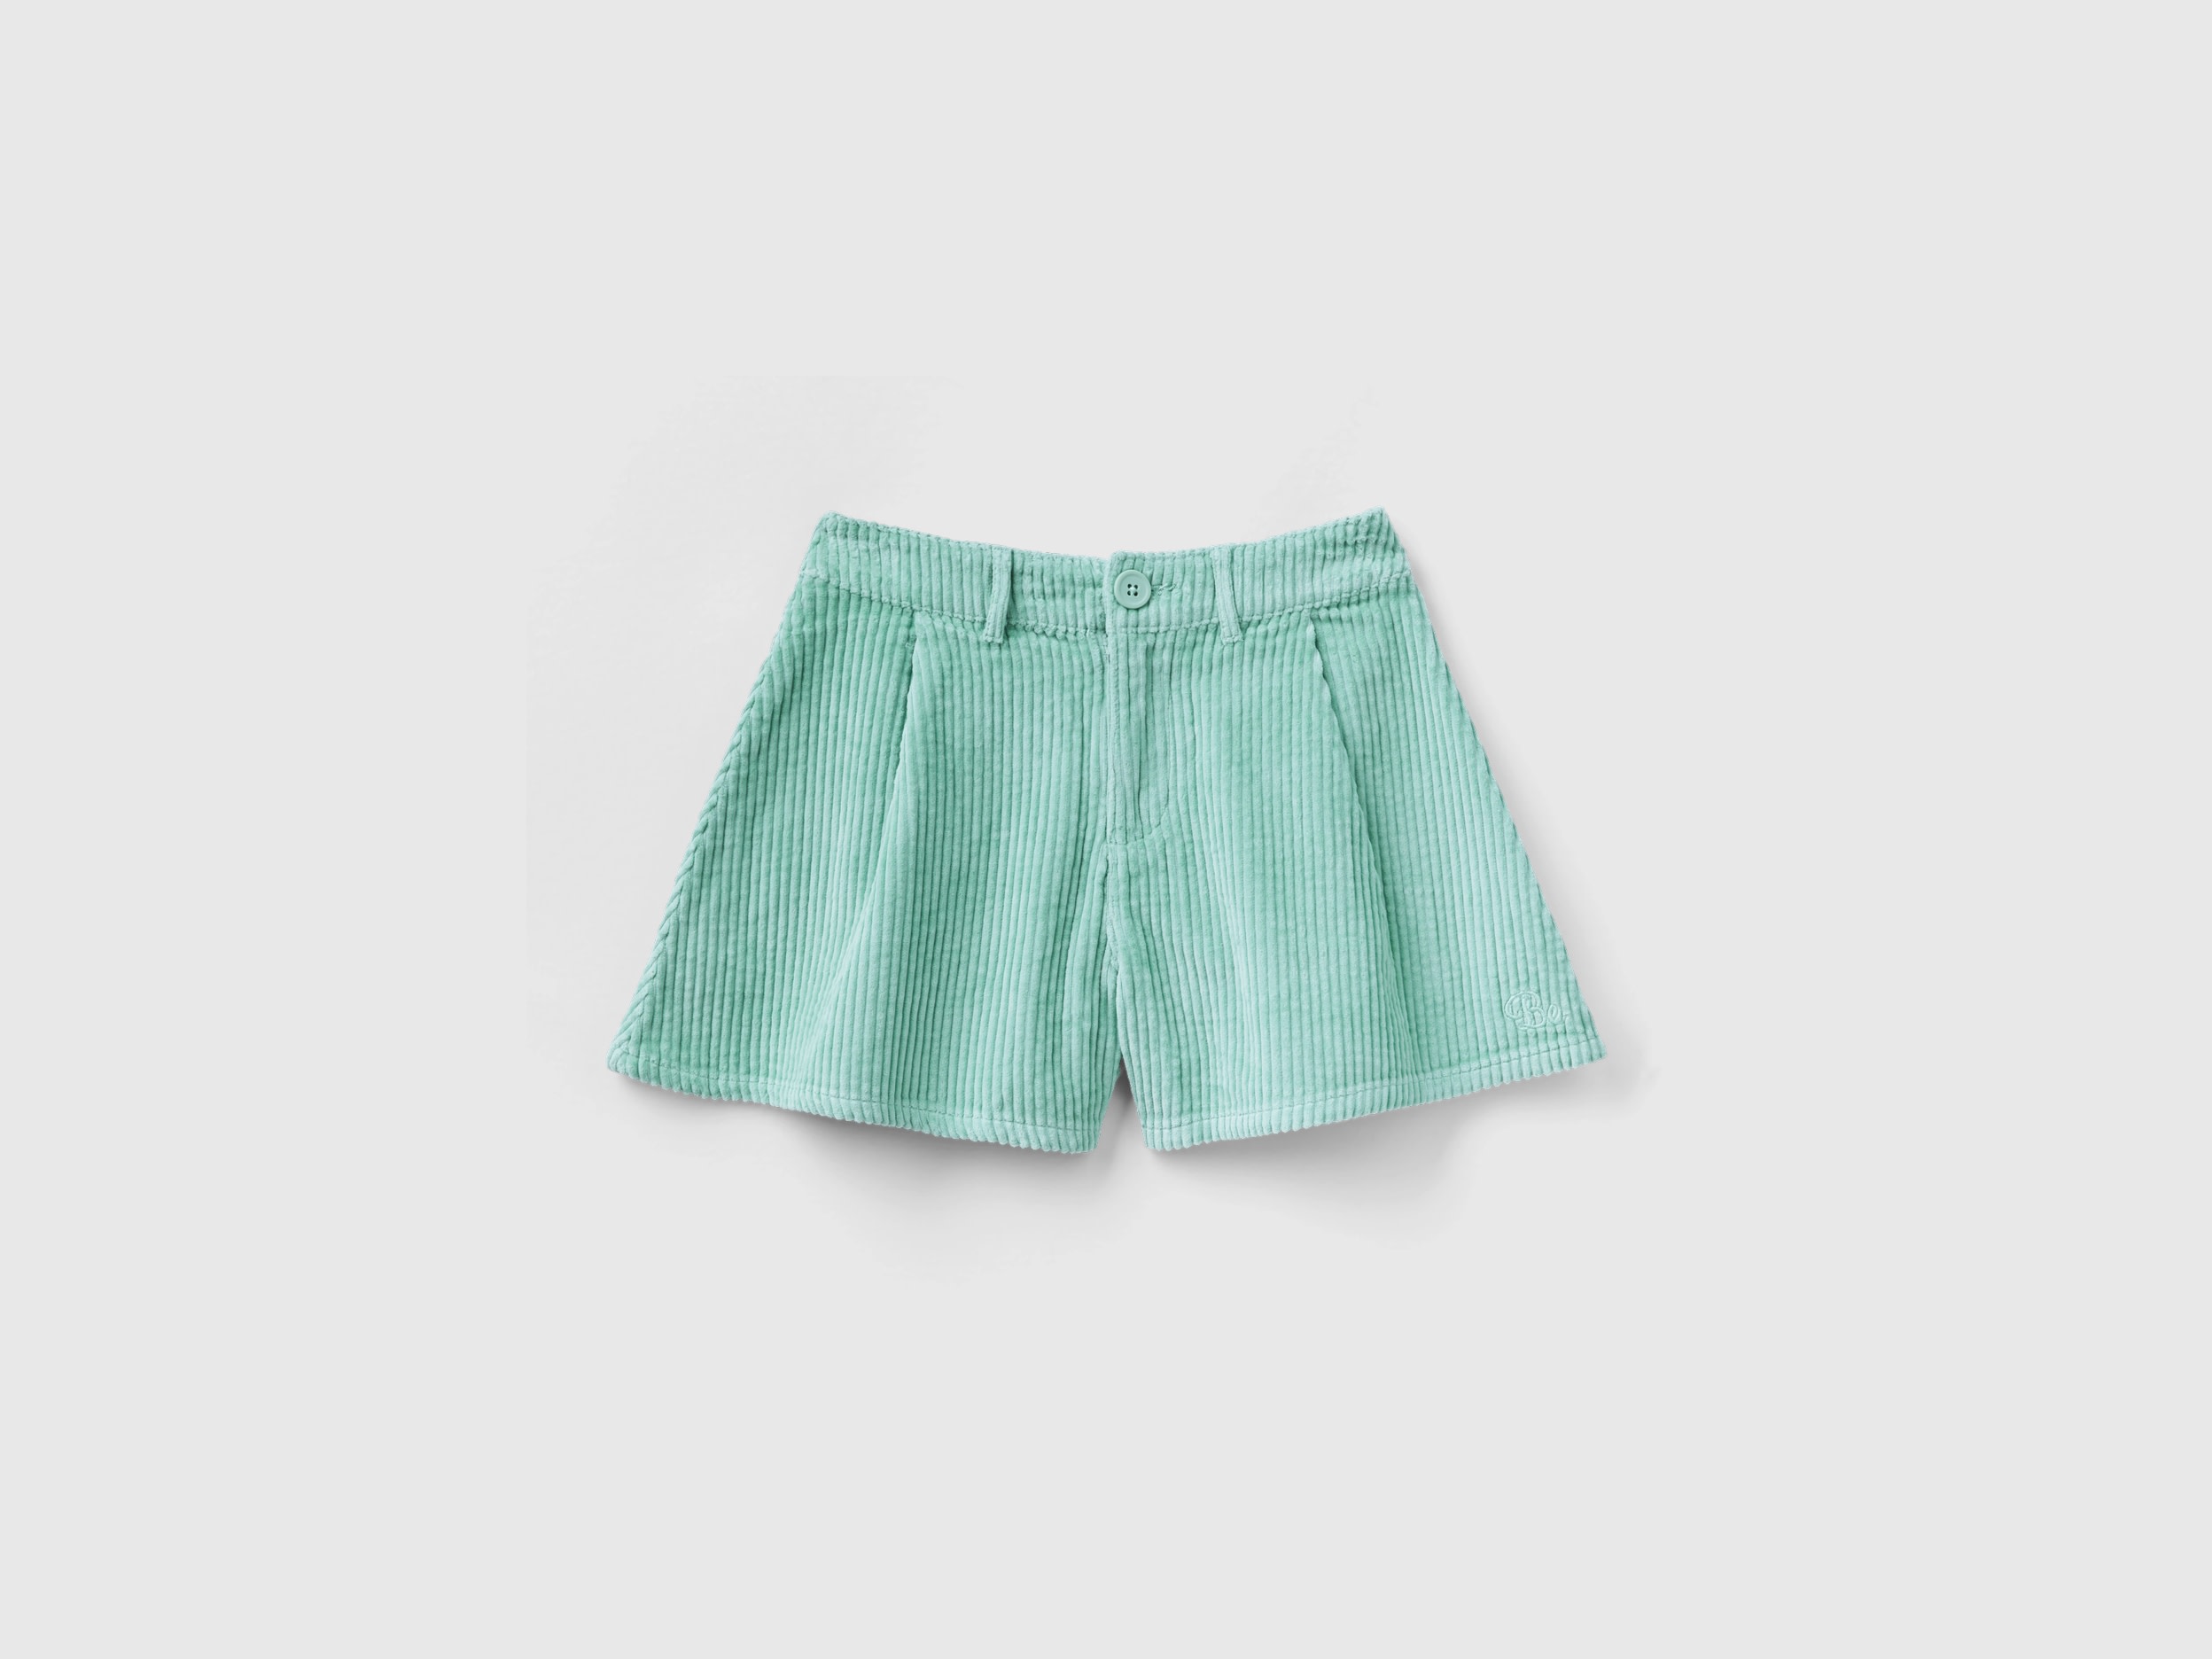 Benetton, Corduroy Bermuda Shorts, size M, Aqua, Kids